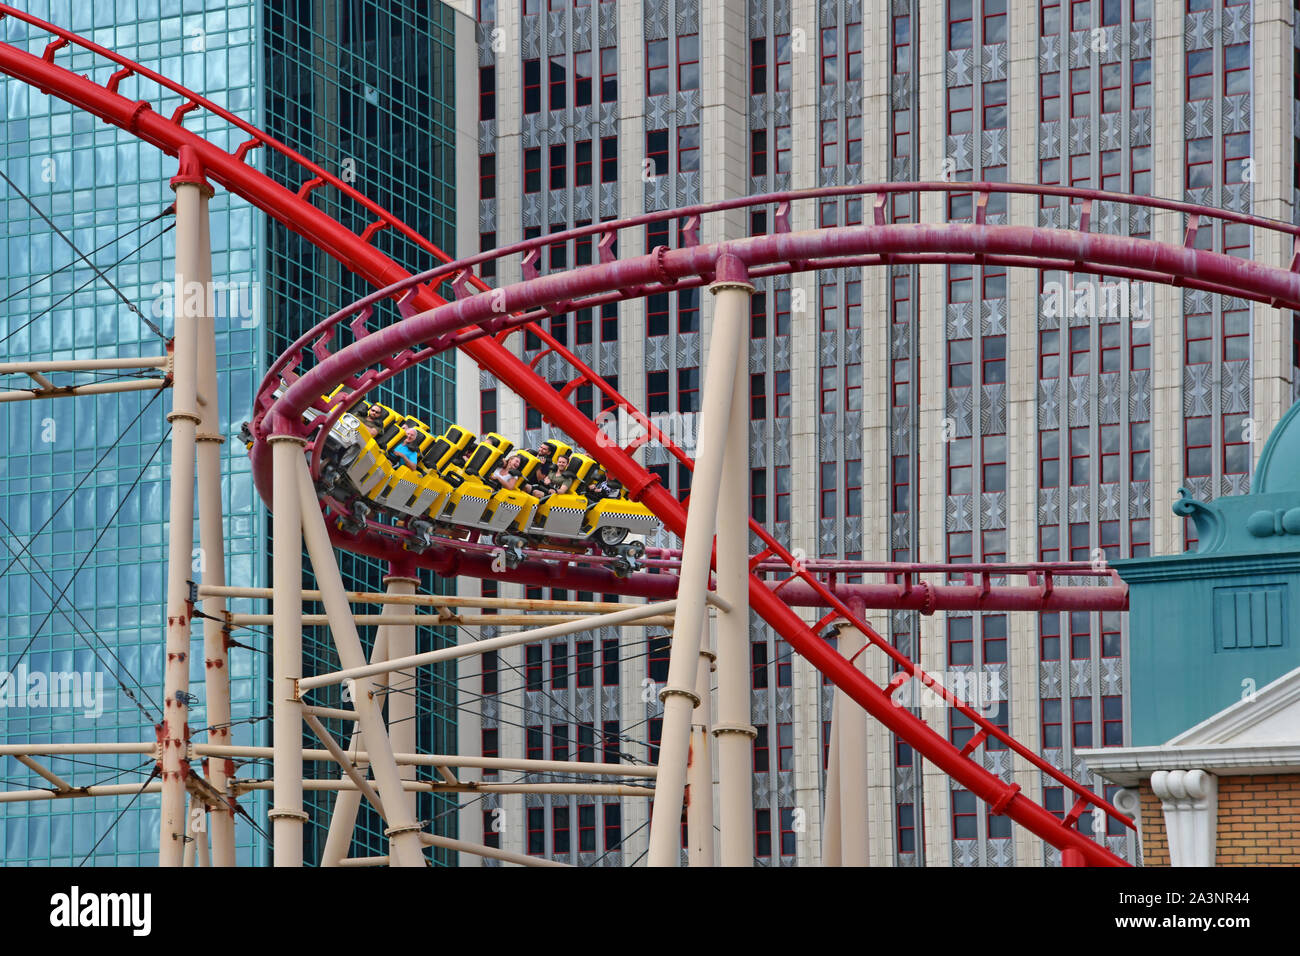 Big Apple Coaster front seat on-ride HD POV New York, New York Hotel &  Casino 